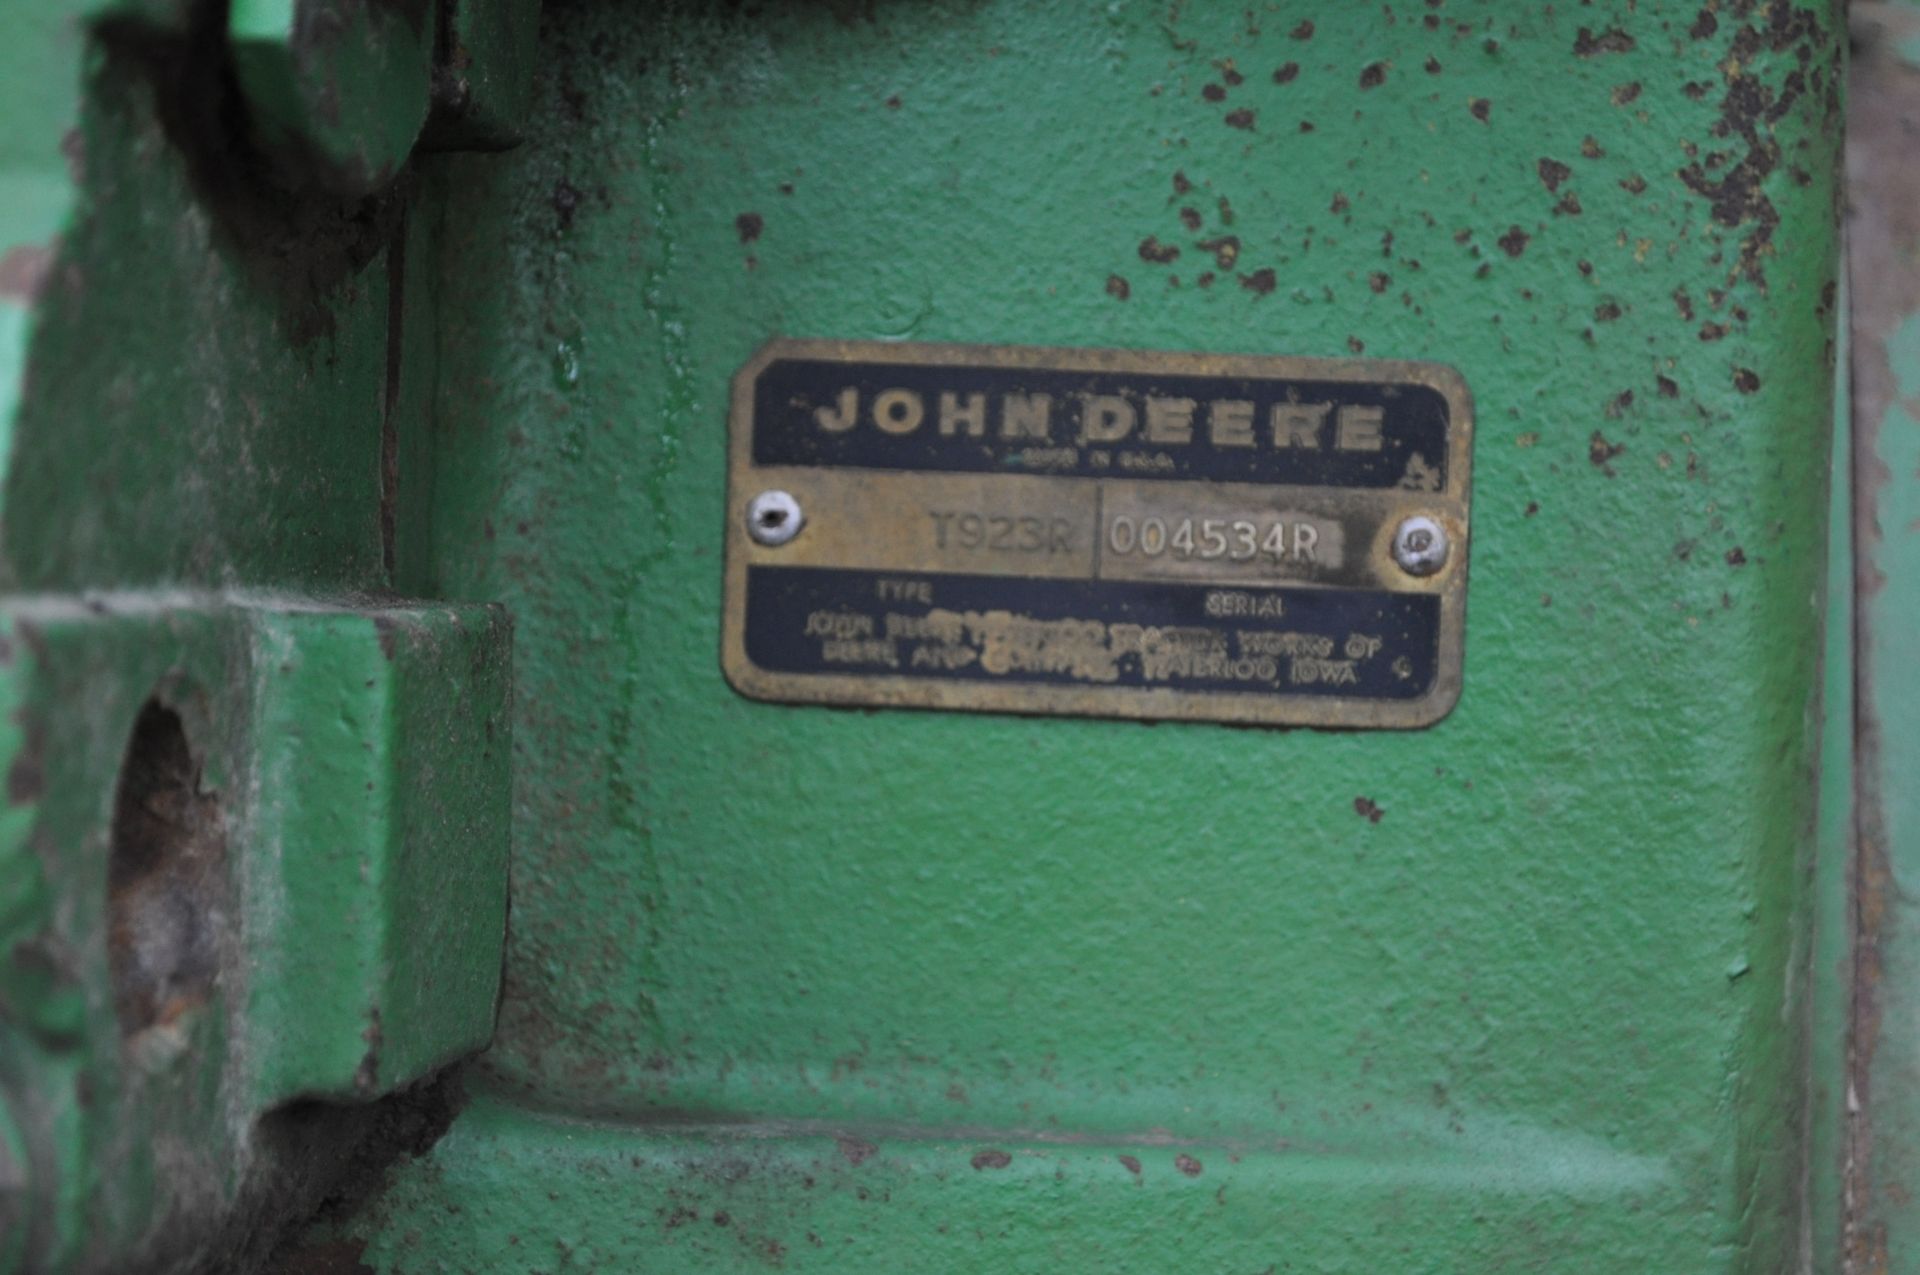 John Deere 7520 tractor, 4WD, diesel, 18.4-34 duals, original fenders, CHA, cab interior kit, 3 - Image 13 of 24